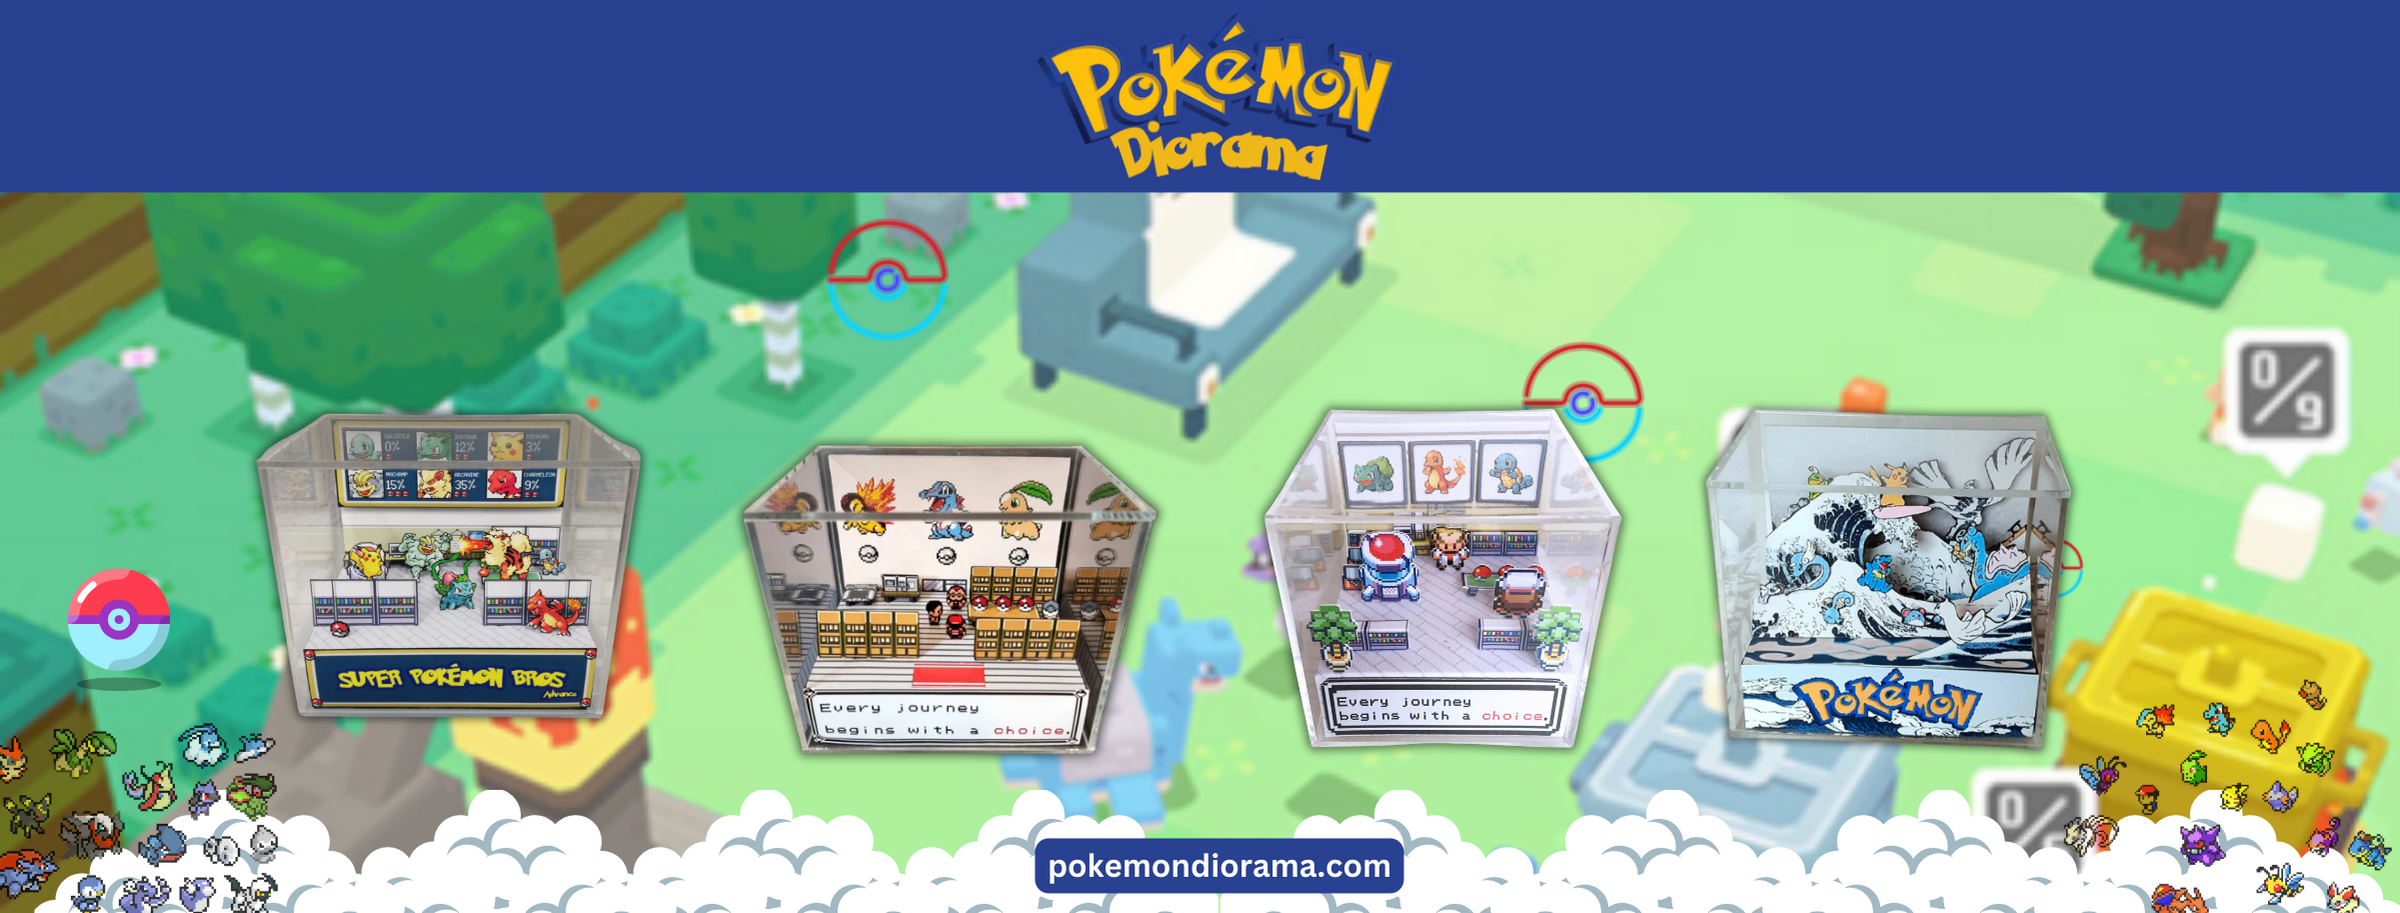 pokemondiorama.com banner 1920x730px 1 - Pokemon Diorama Store